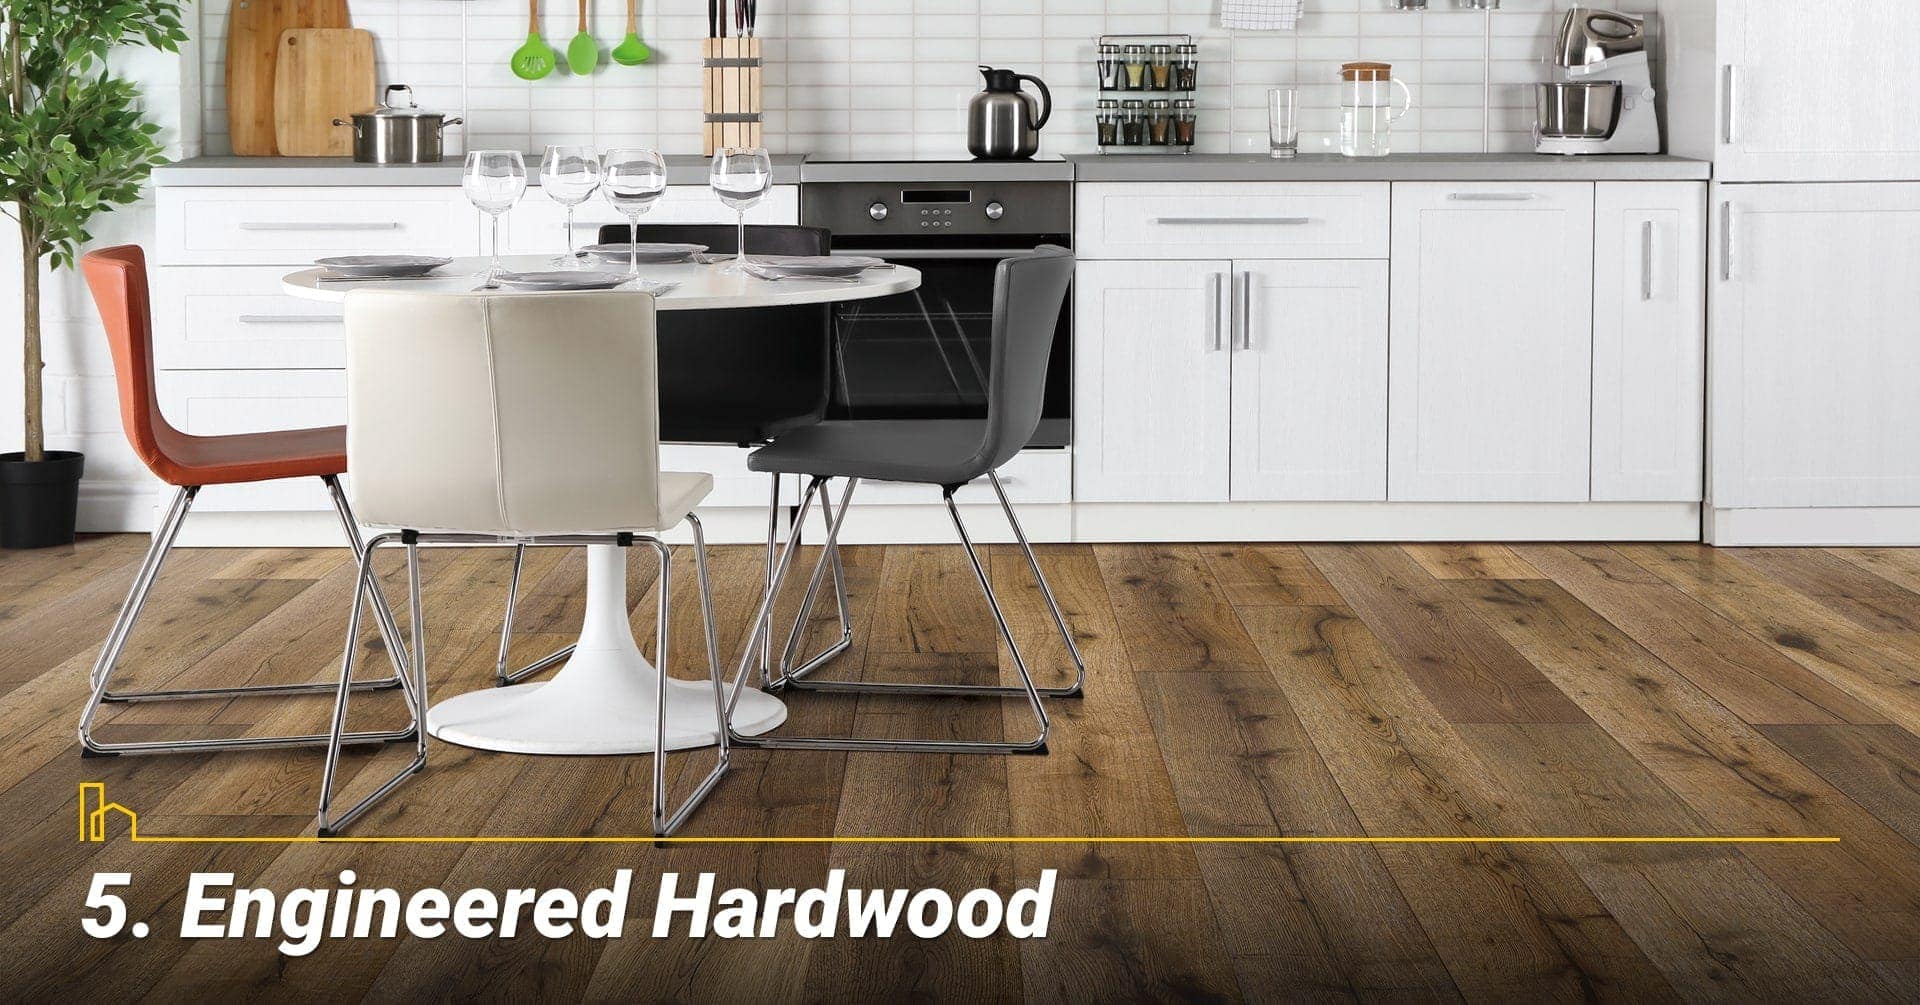 Engineered Hardwood, cover your floor with engineered hardwood